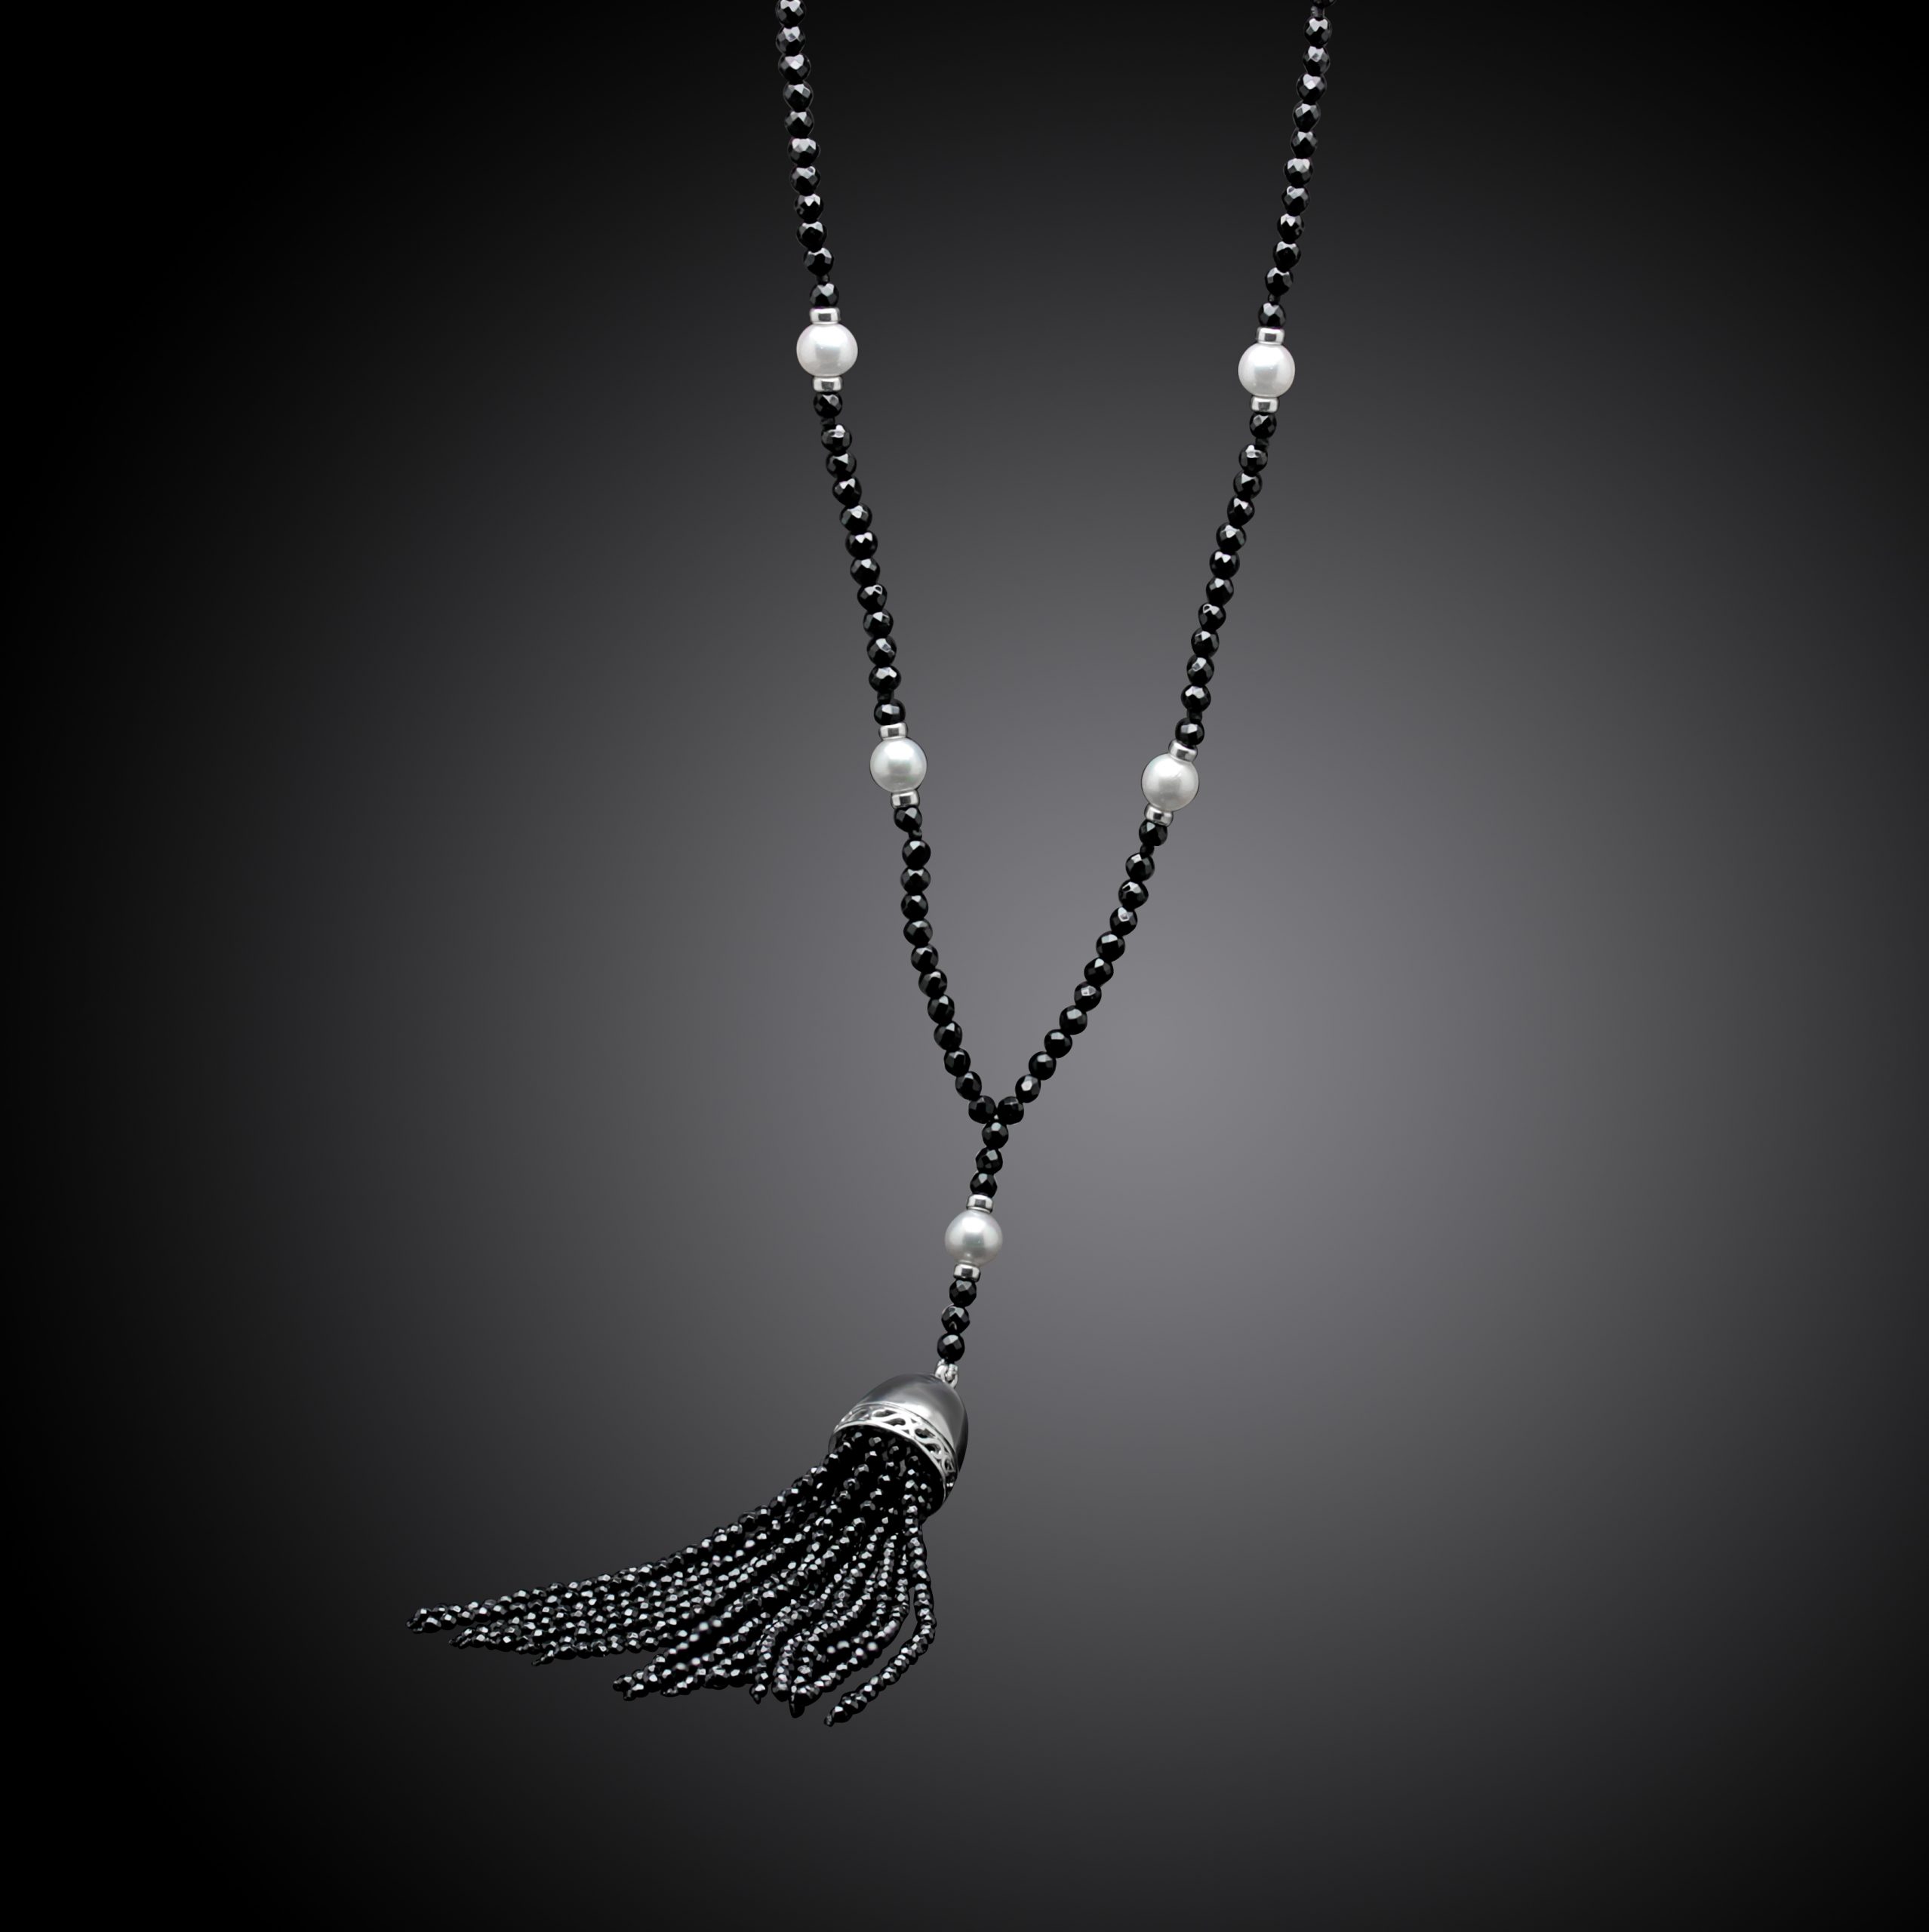 Titanium Necklace with Big Black Pearl Pendant | Nonita Jewelry